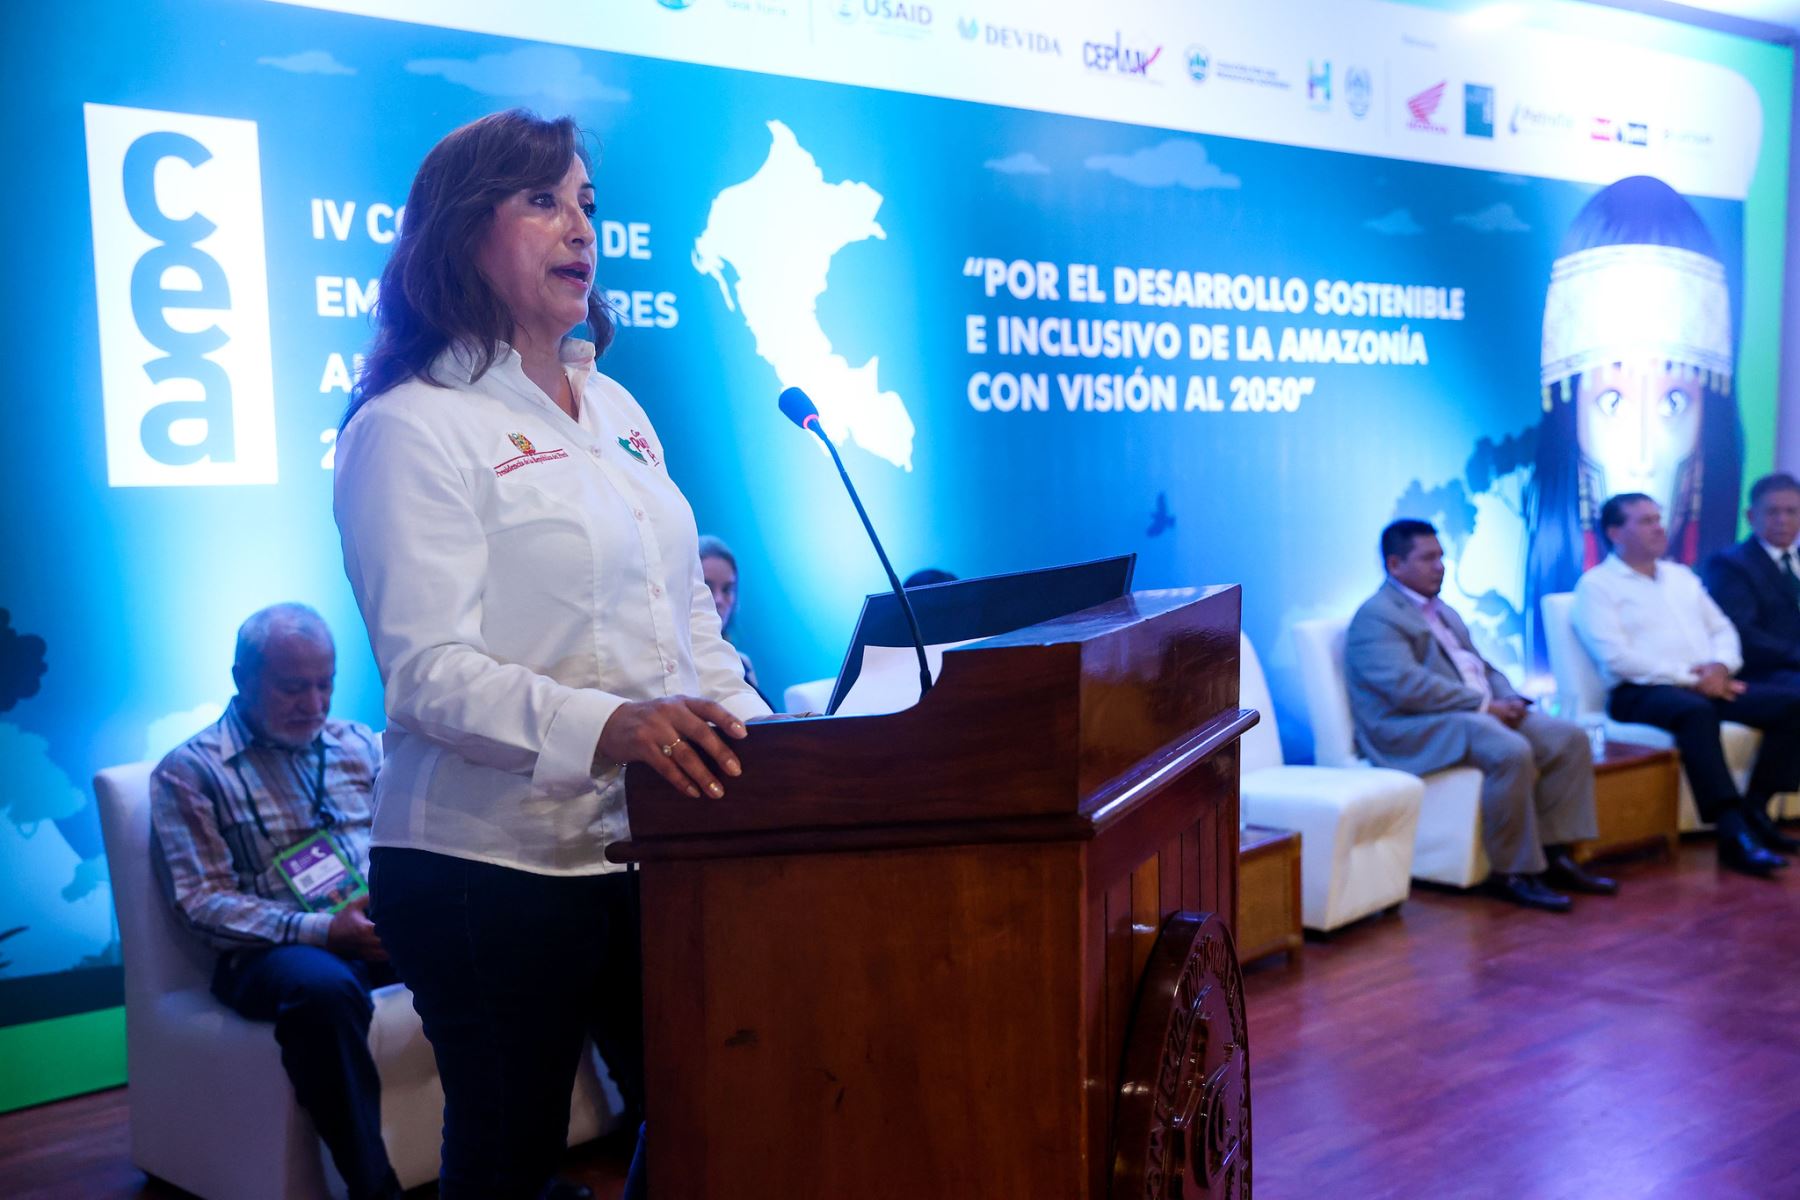 Peru’s President: Government works for Amazon’s integrated, inclusive development